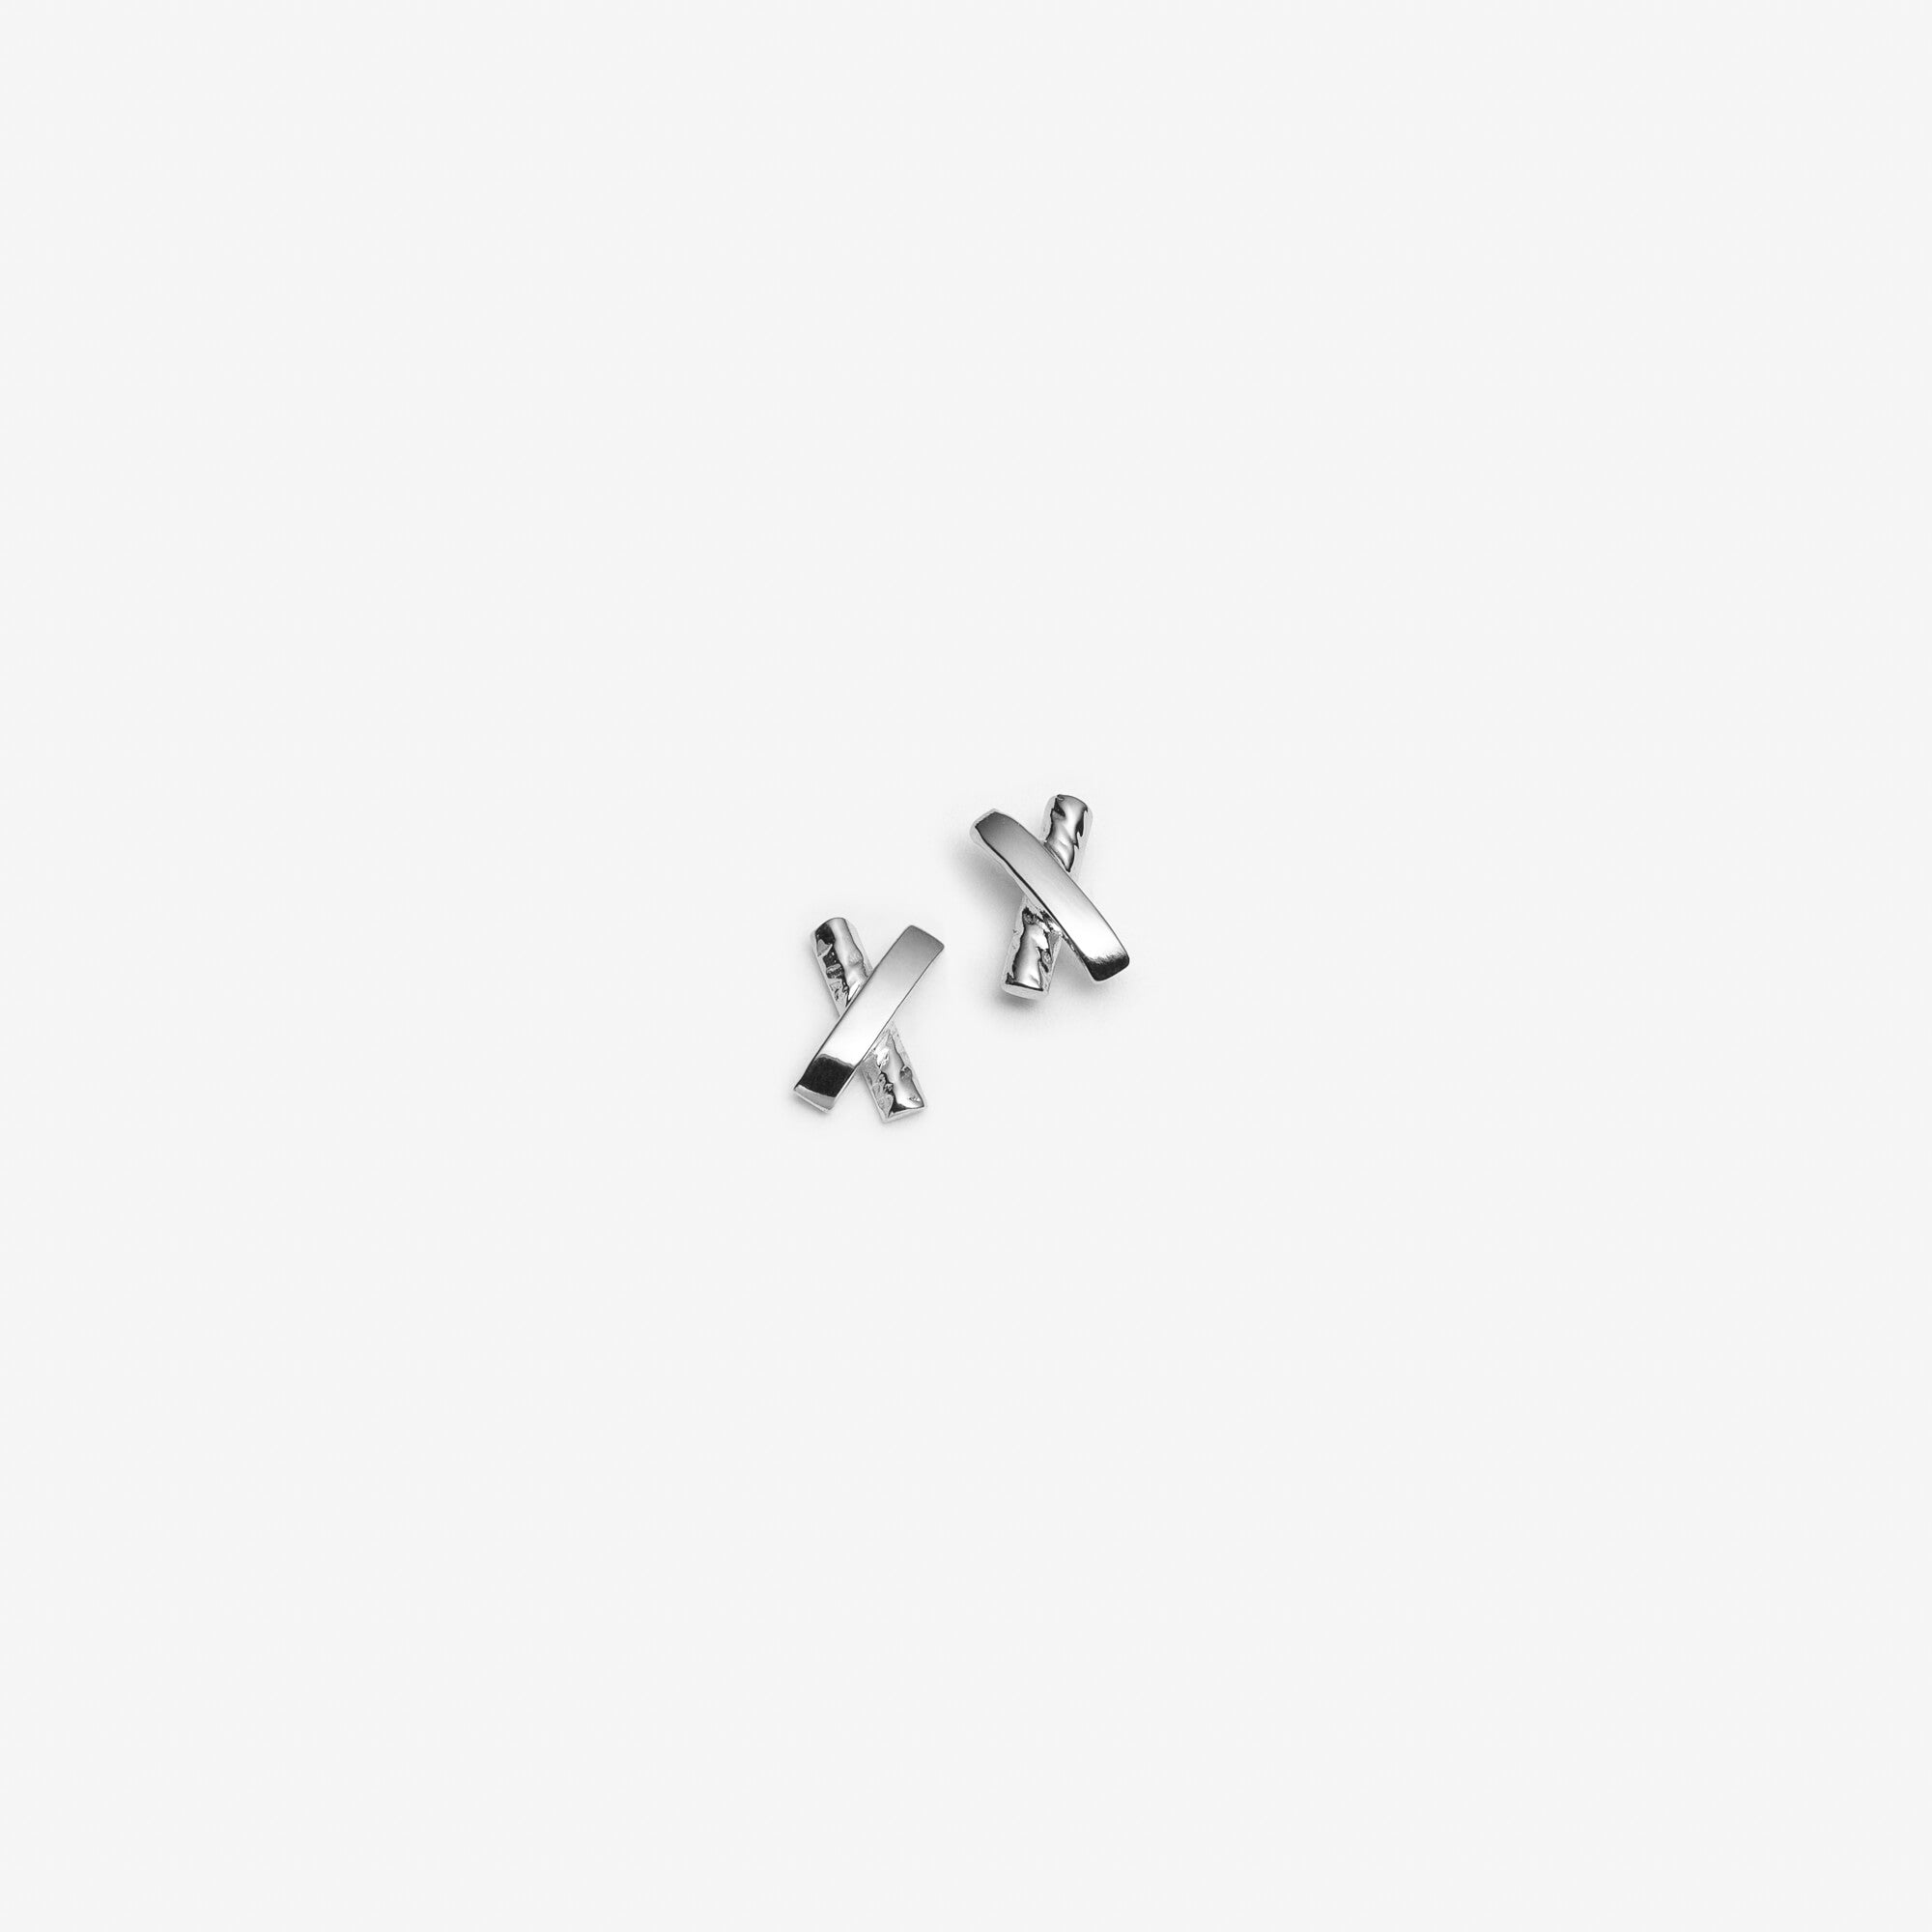 Optimiste - X-Shaped Earrings - Sterling Silver or Gold-Plated Earrings